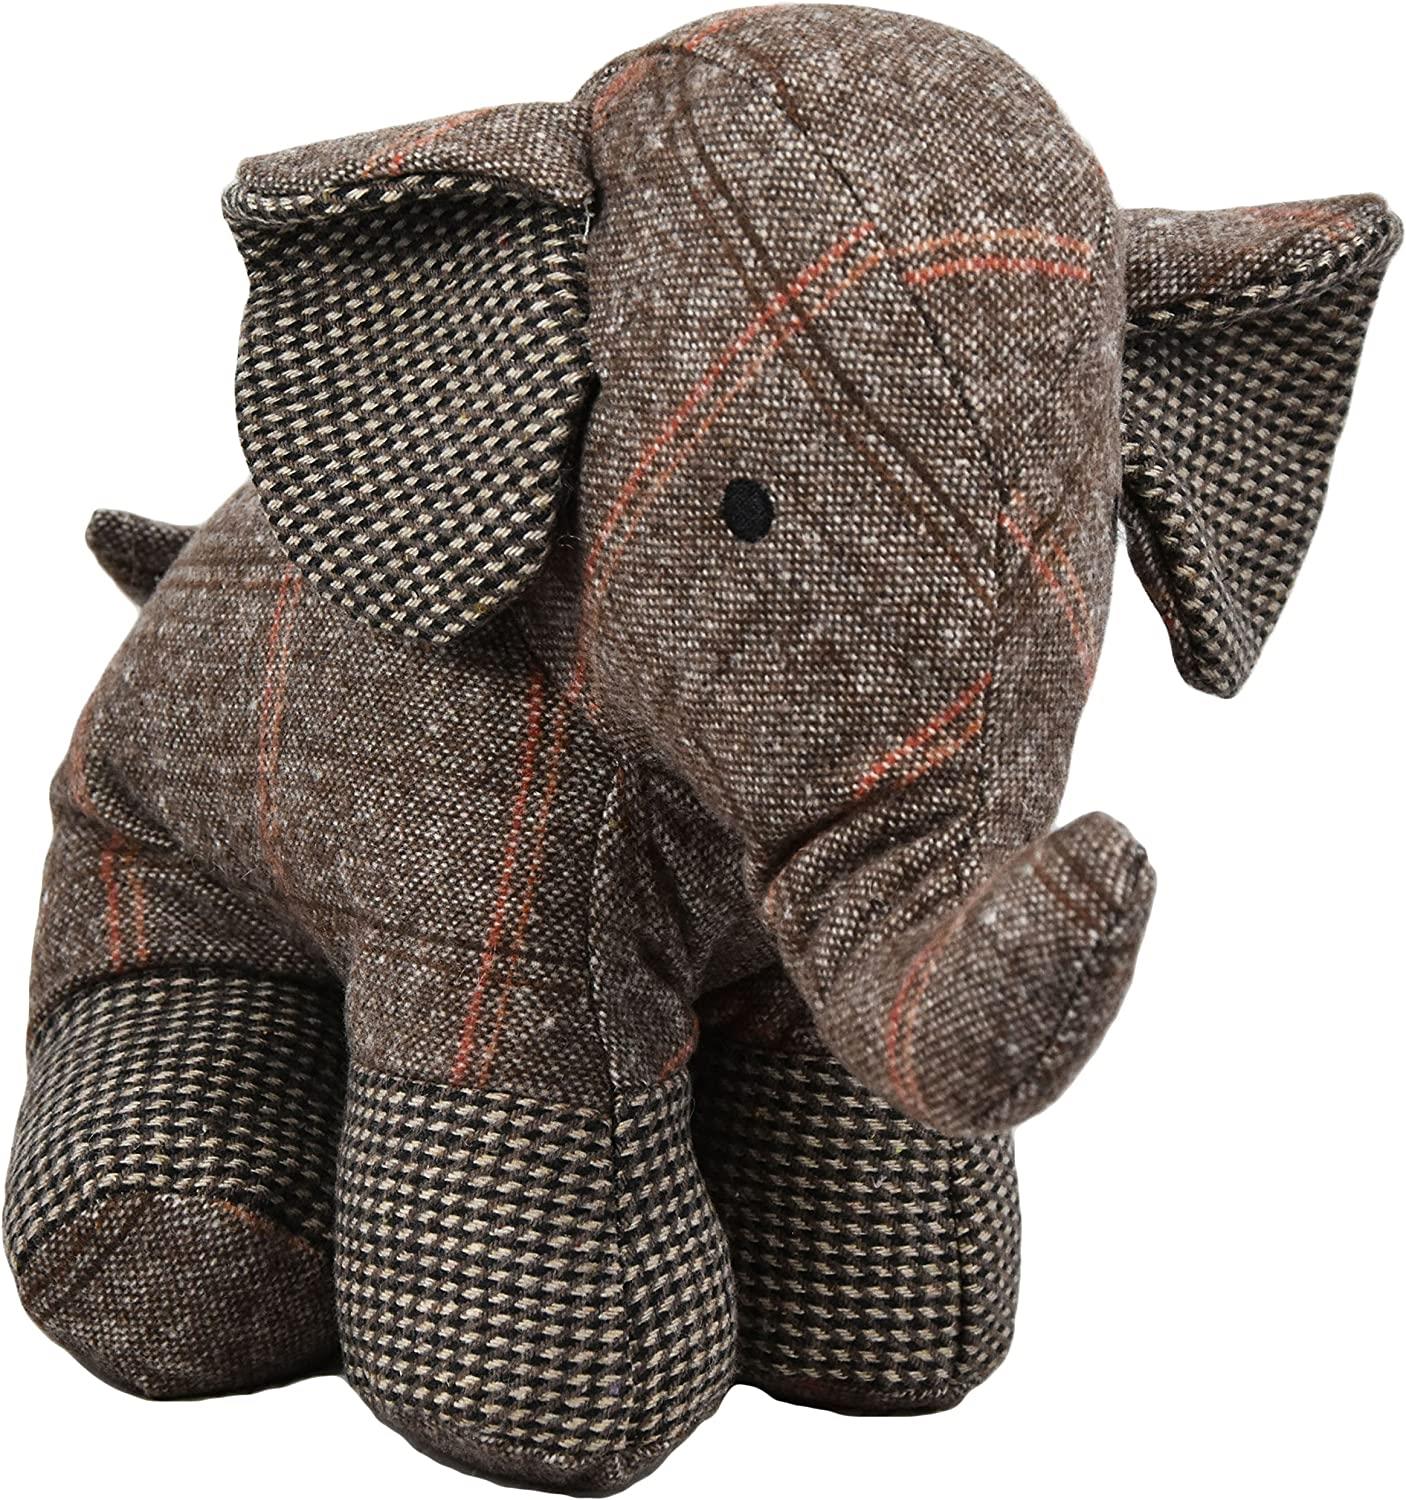 Tartan Elephant Door Stopper by The Magic Toy Shop - UKBuyZone